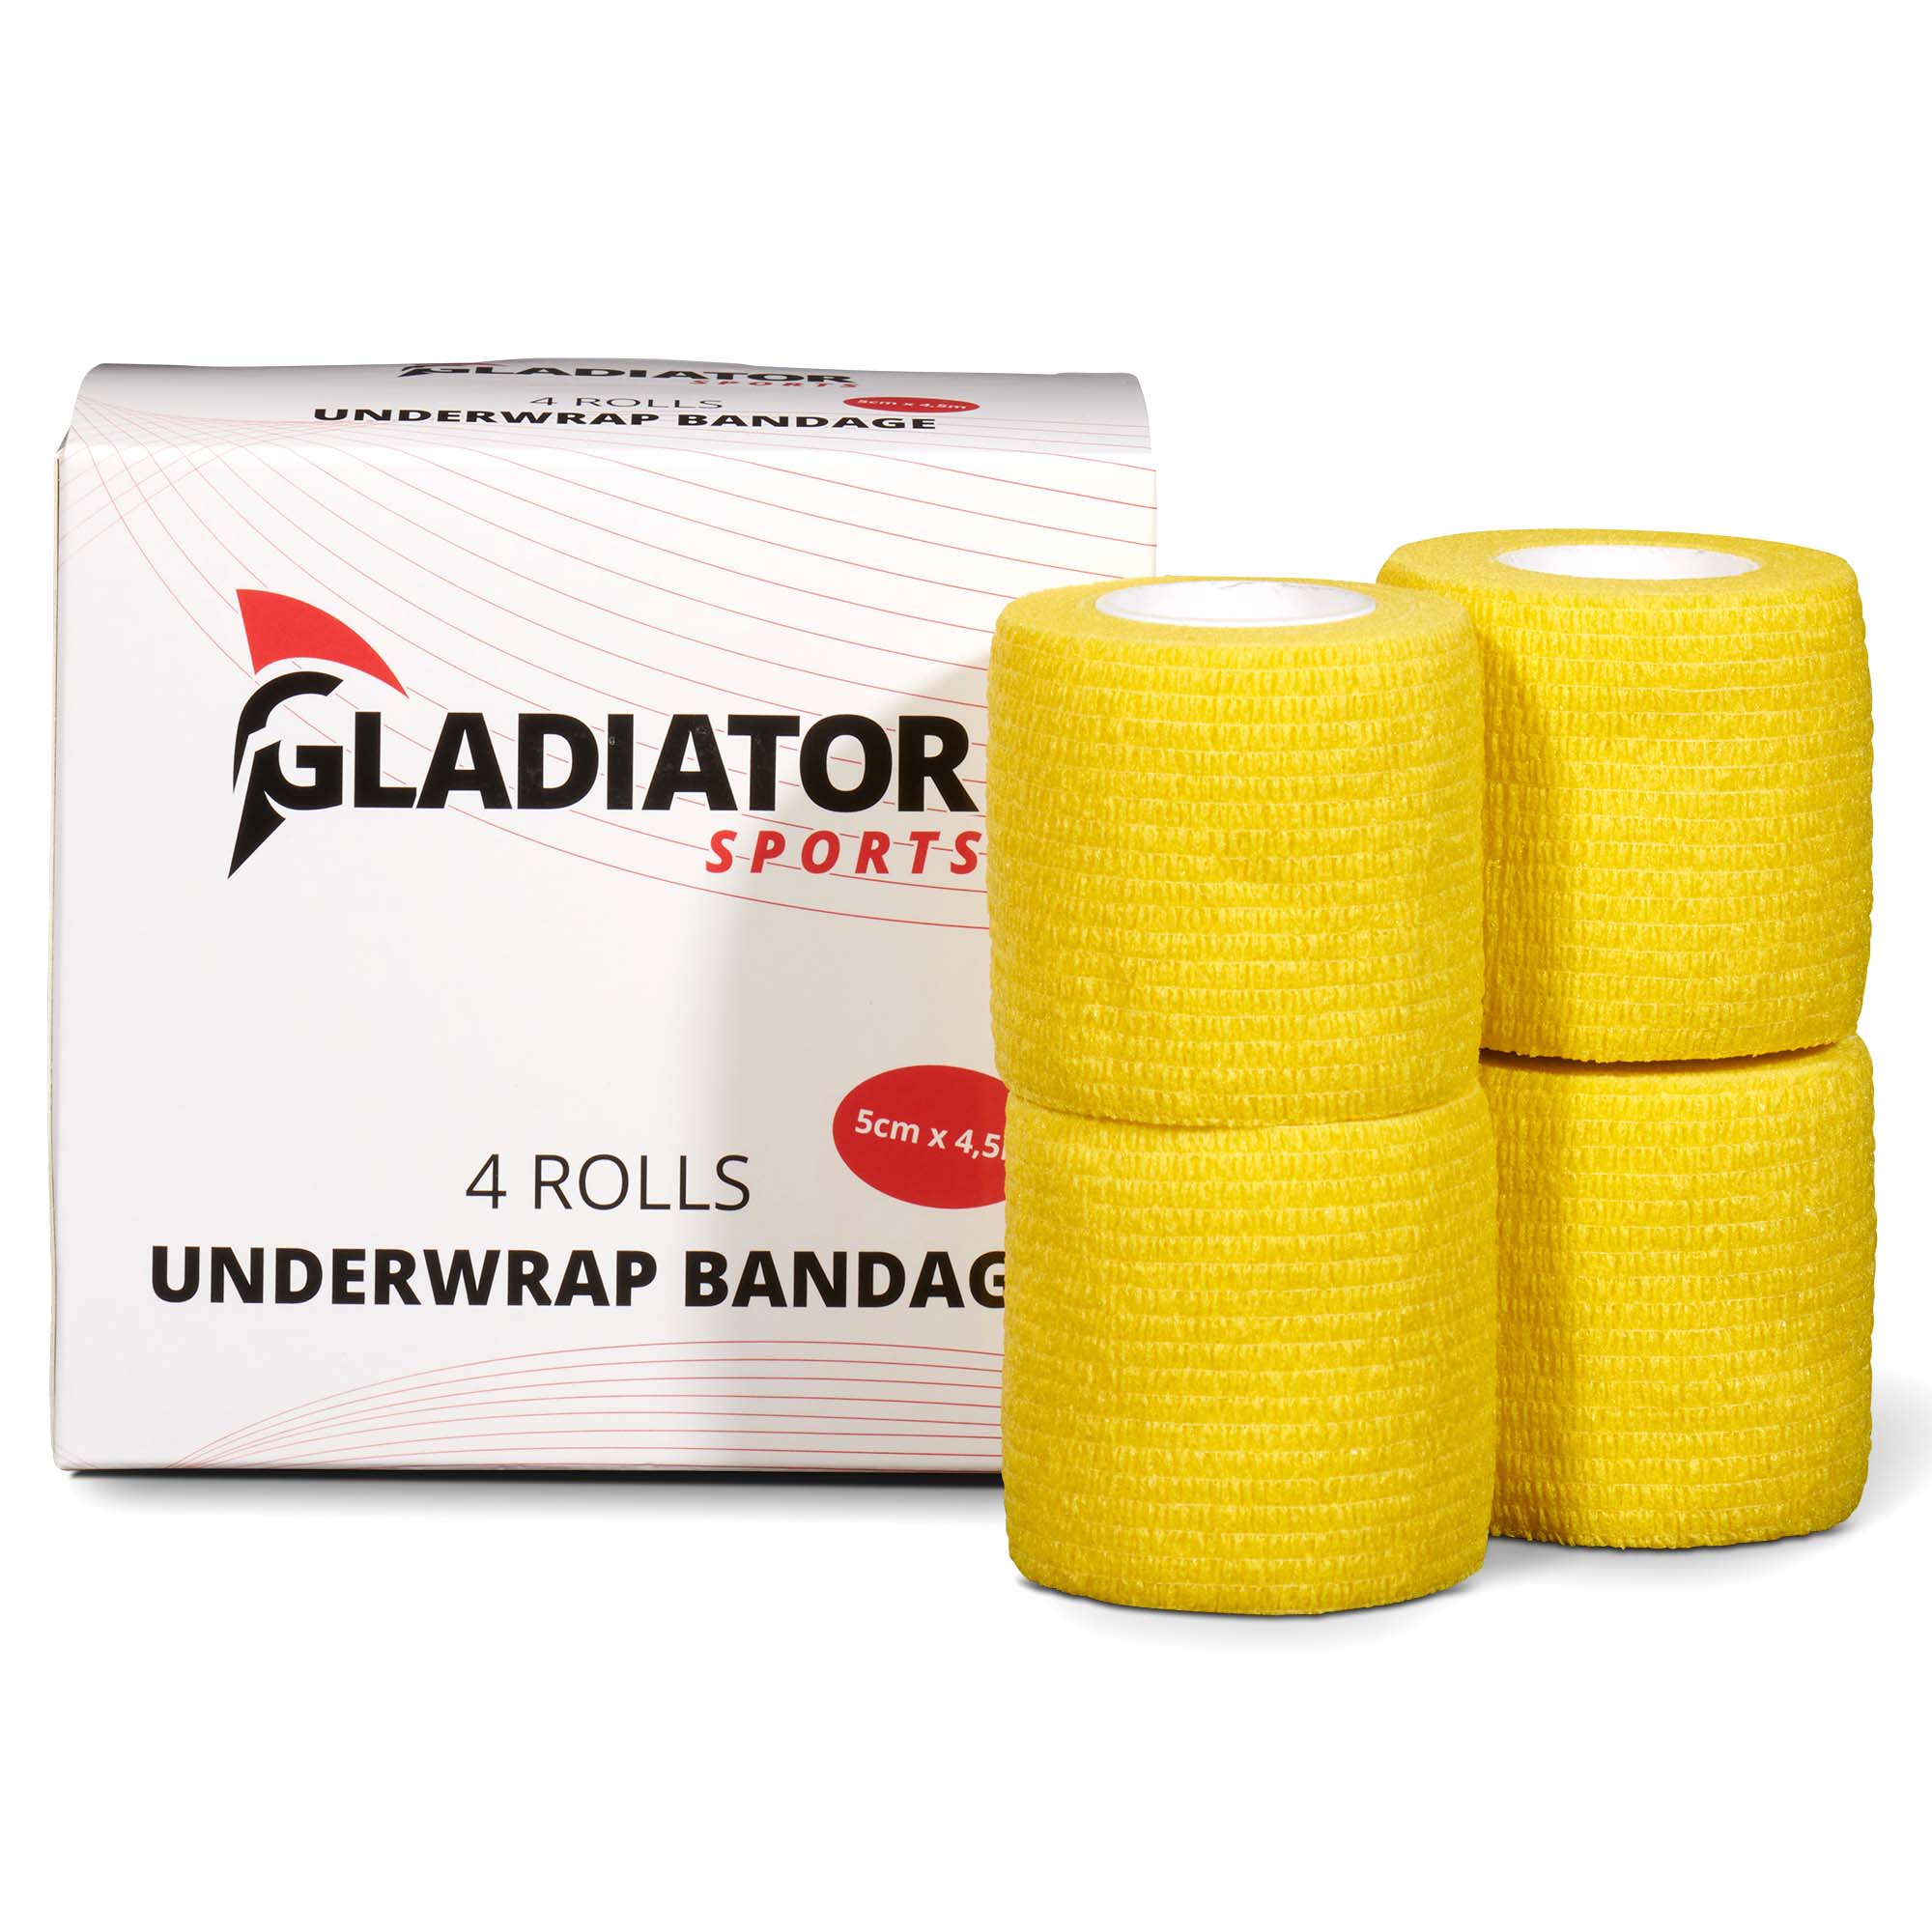 Gladiator Sports underwrap bandage 4 rolls with box yellow